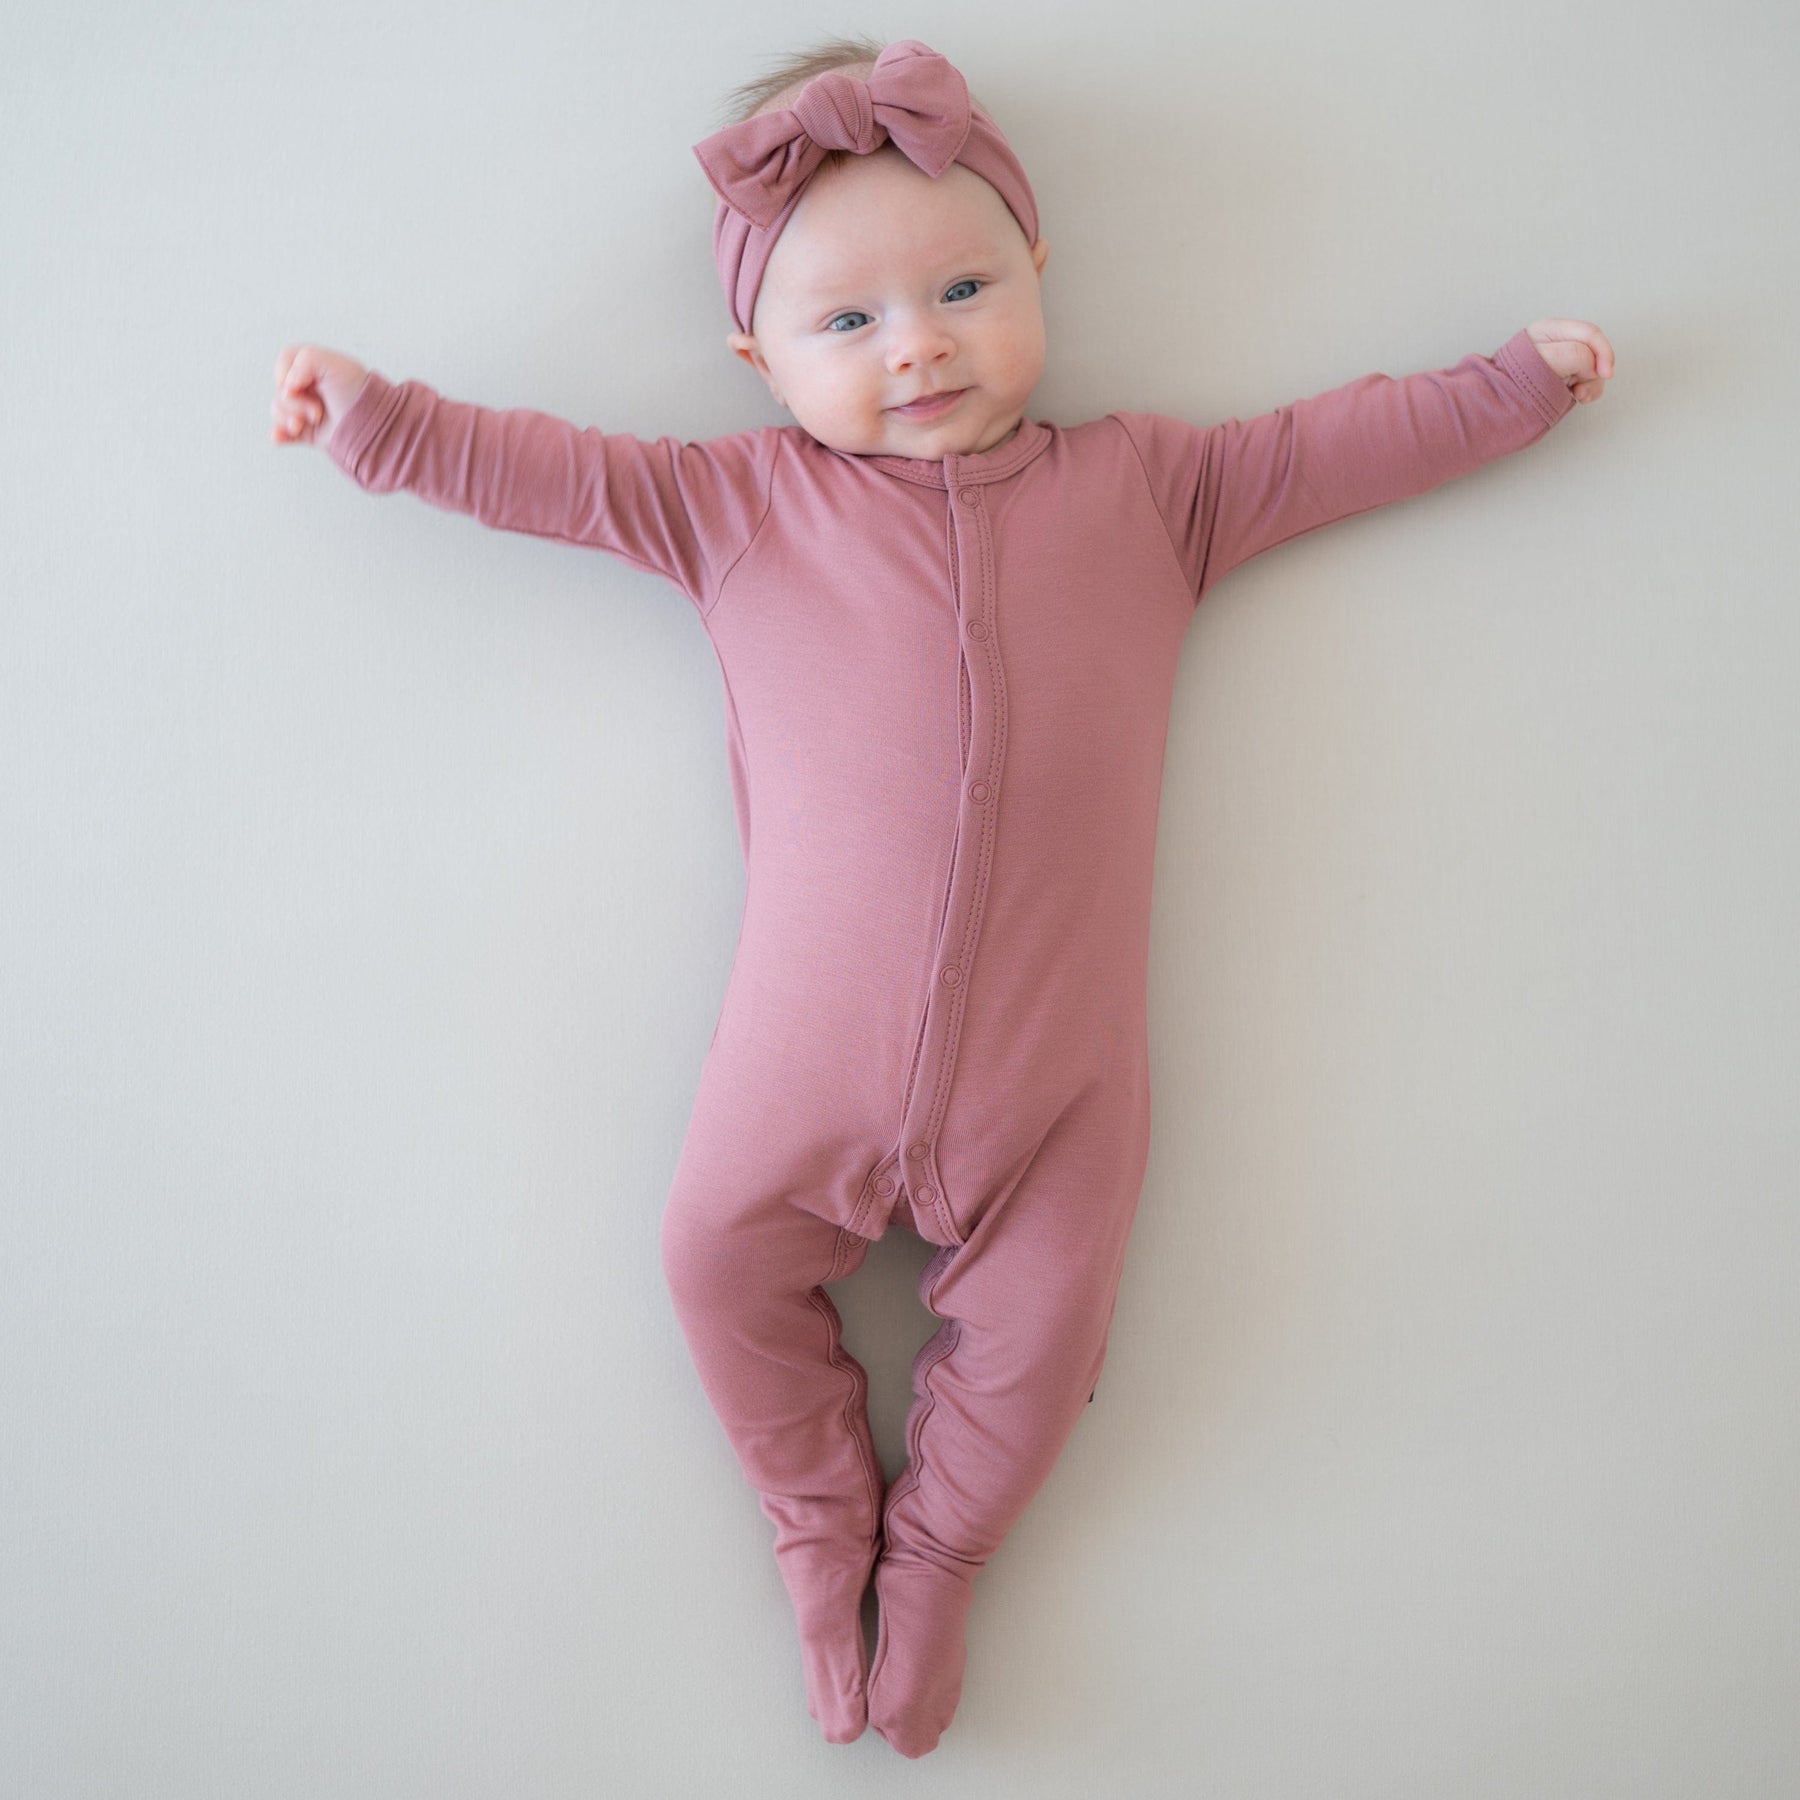 Infant wearing Kyte Baby Snap Footie pajamas in Dusty Rose